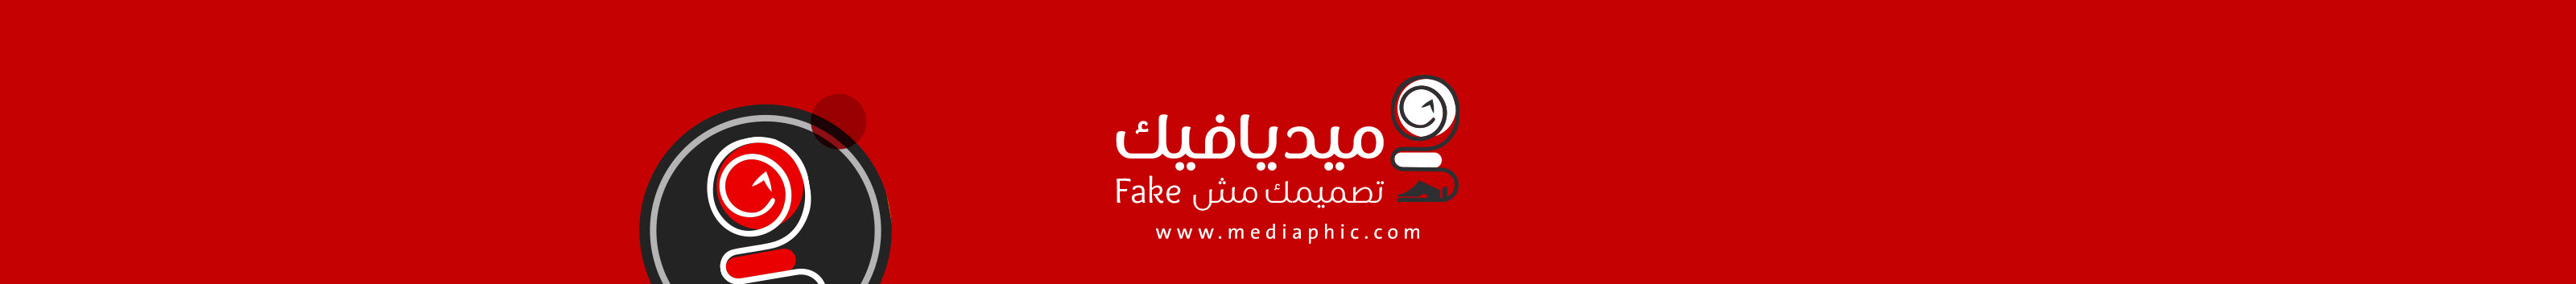 Mediaphic Design's profile banner